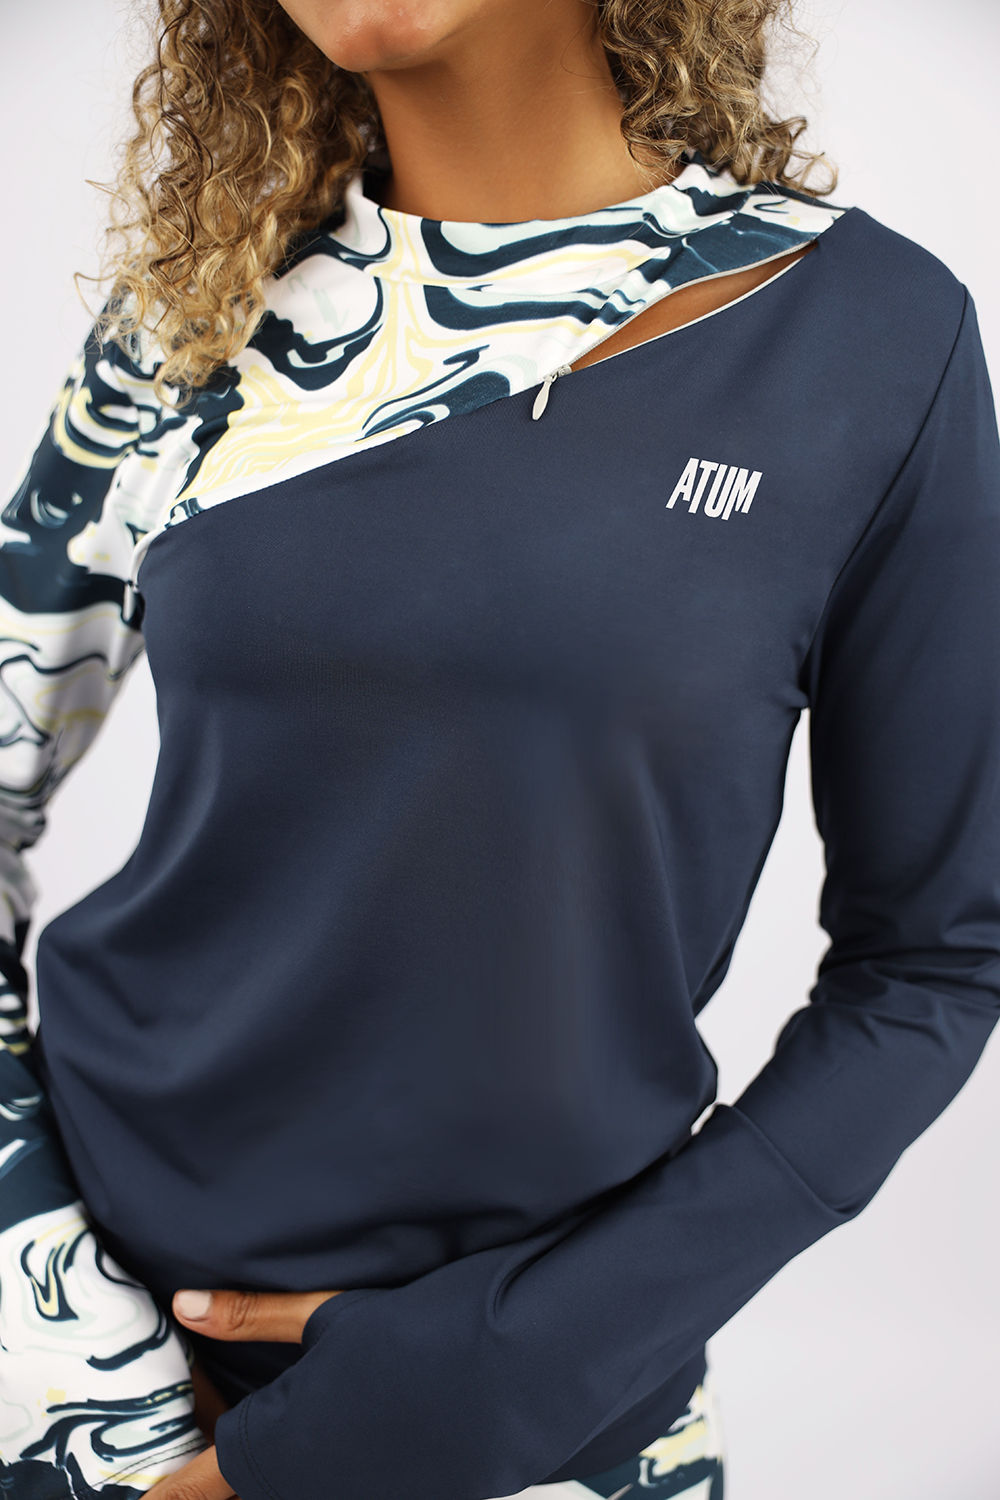 Atum Women's Vivid Long Sleeve T-shirt